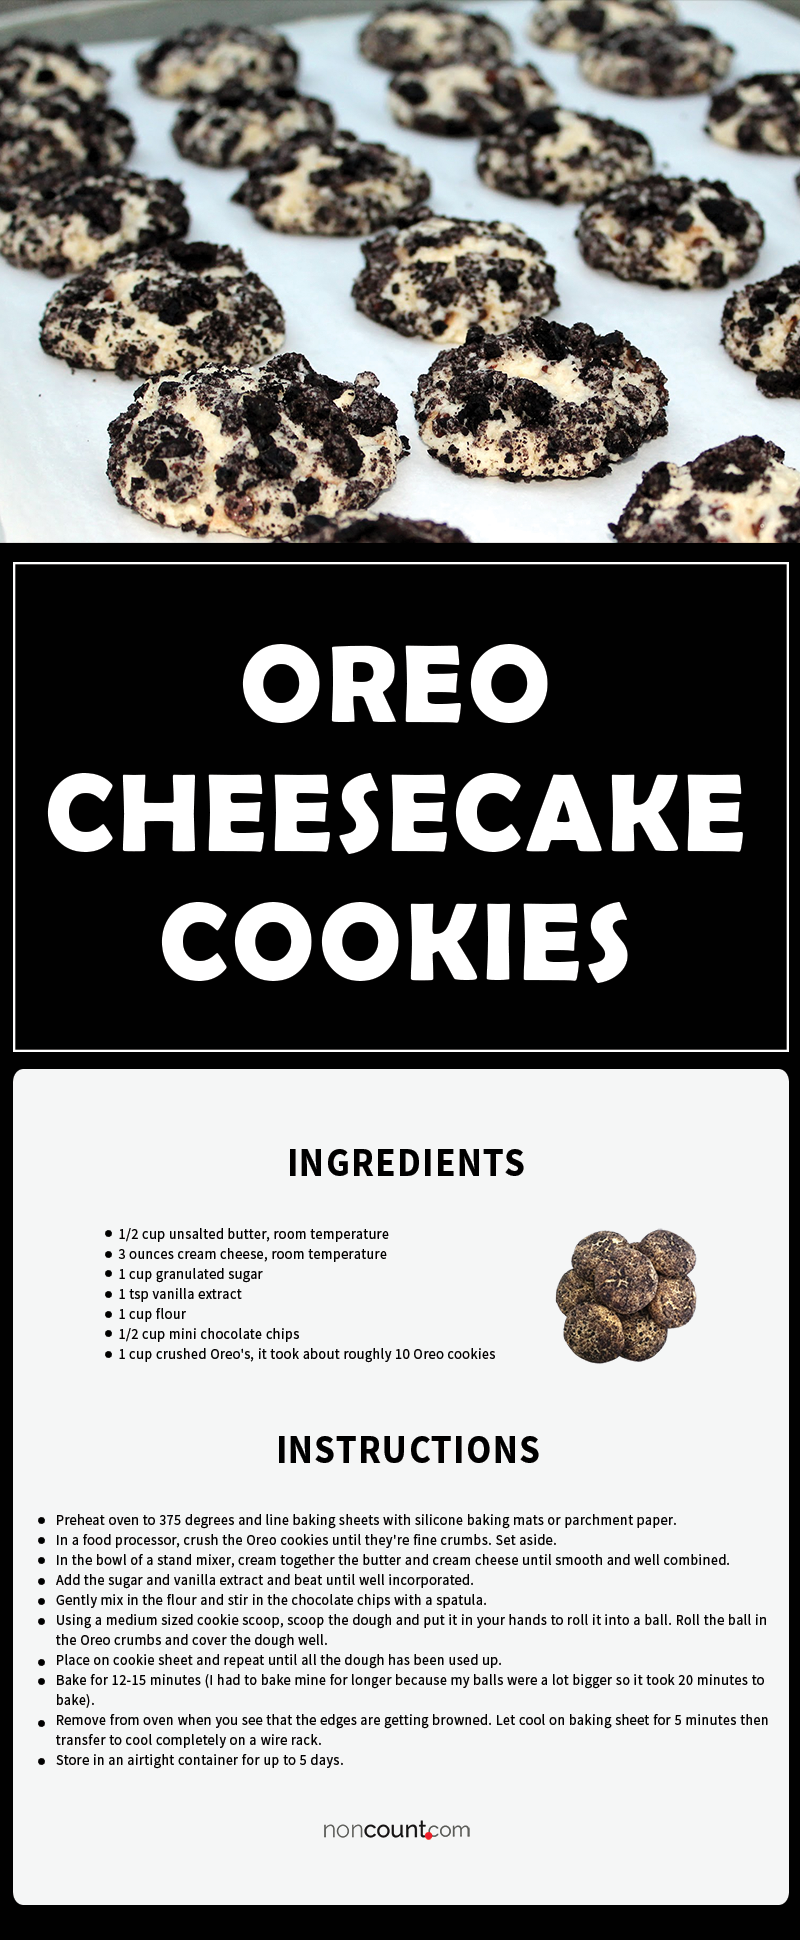 Oreo Cheesecake Cookies Image of detail recipe